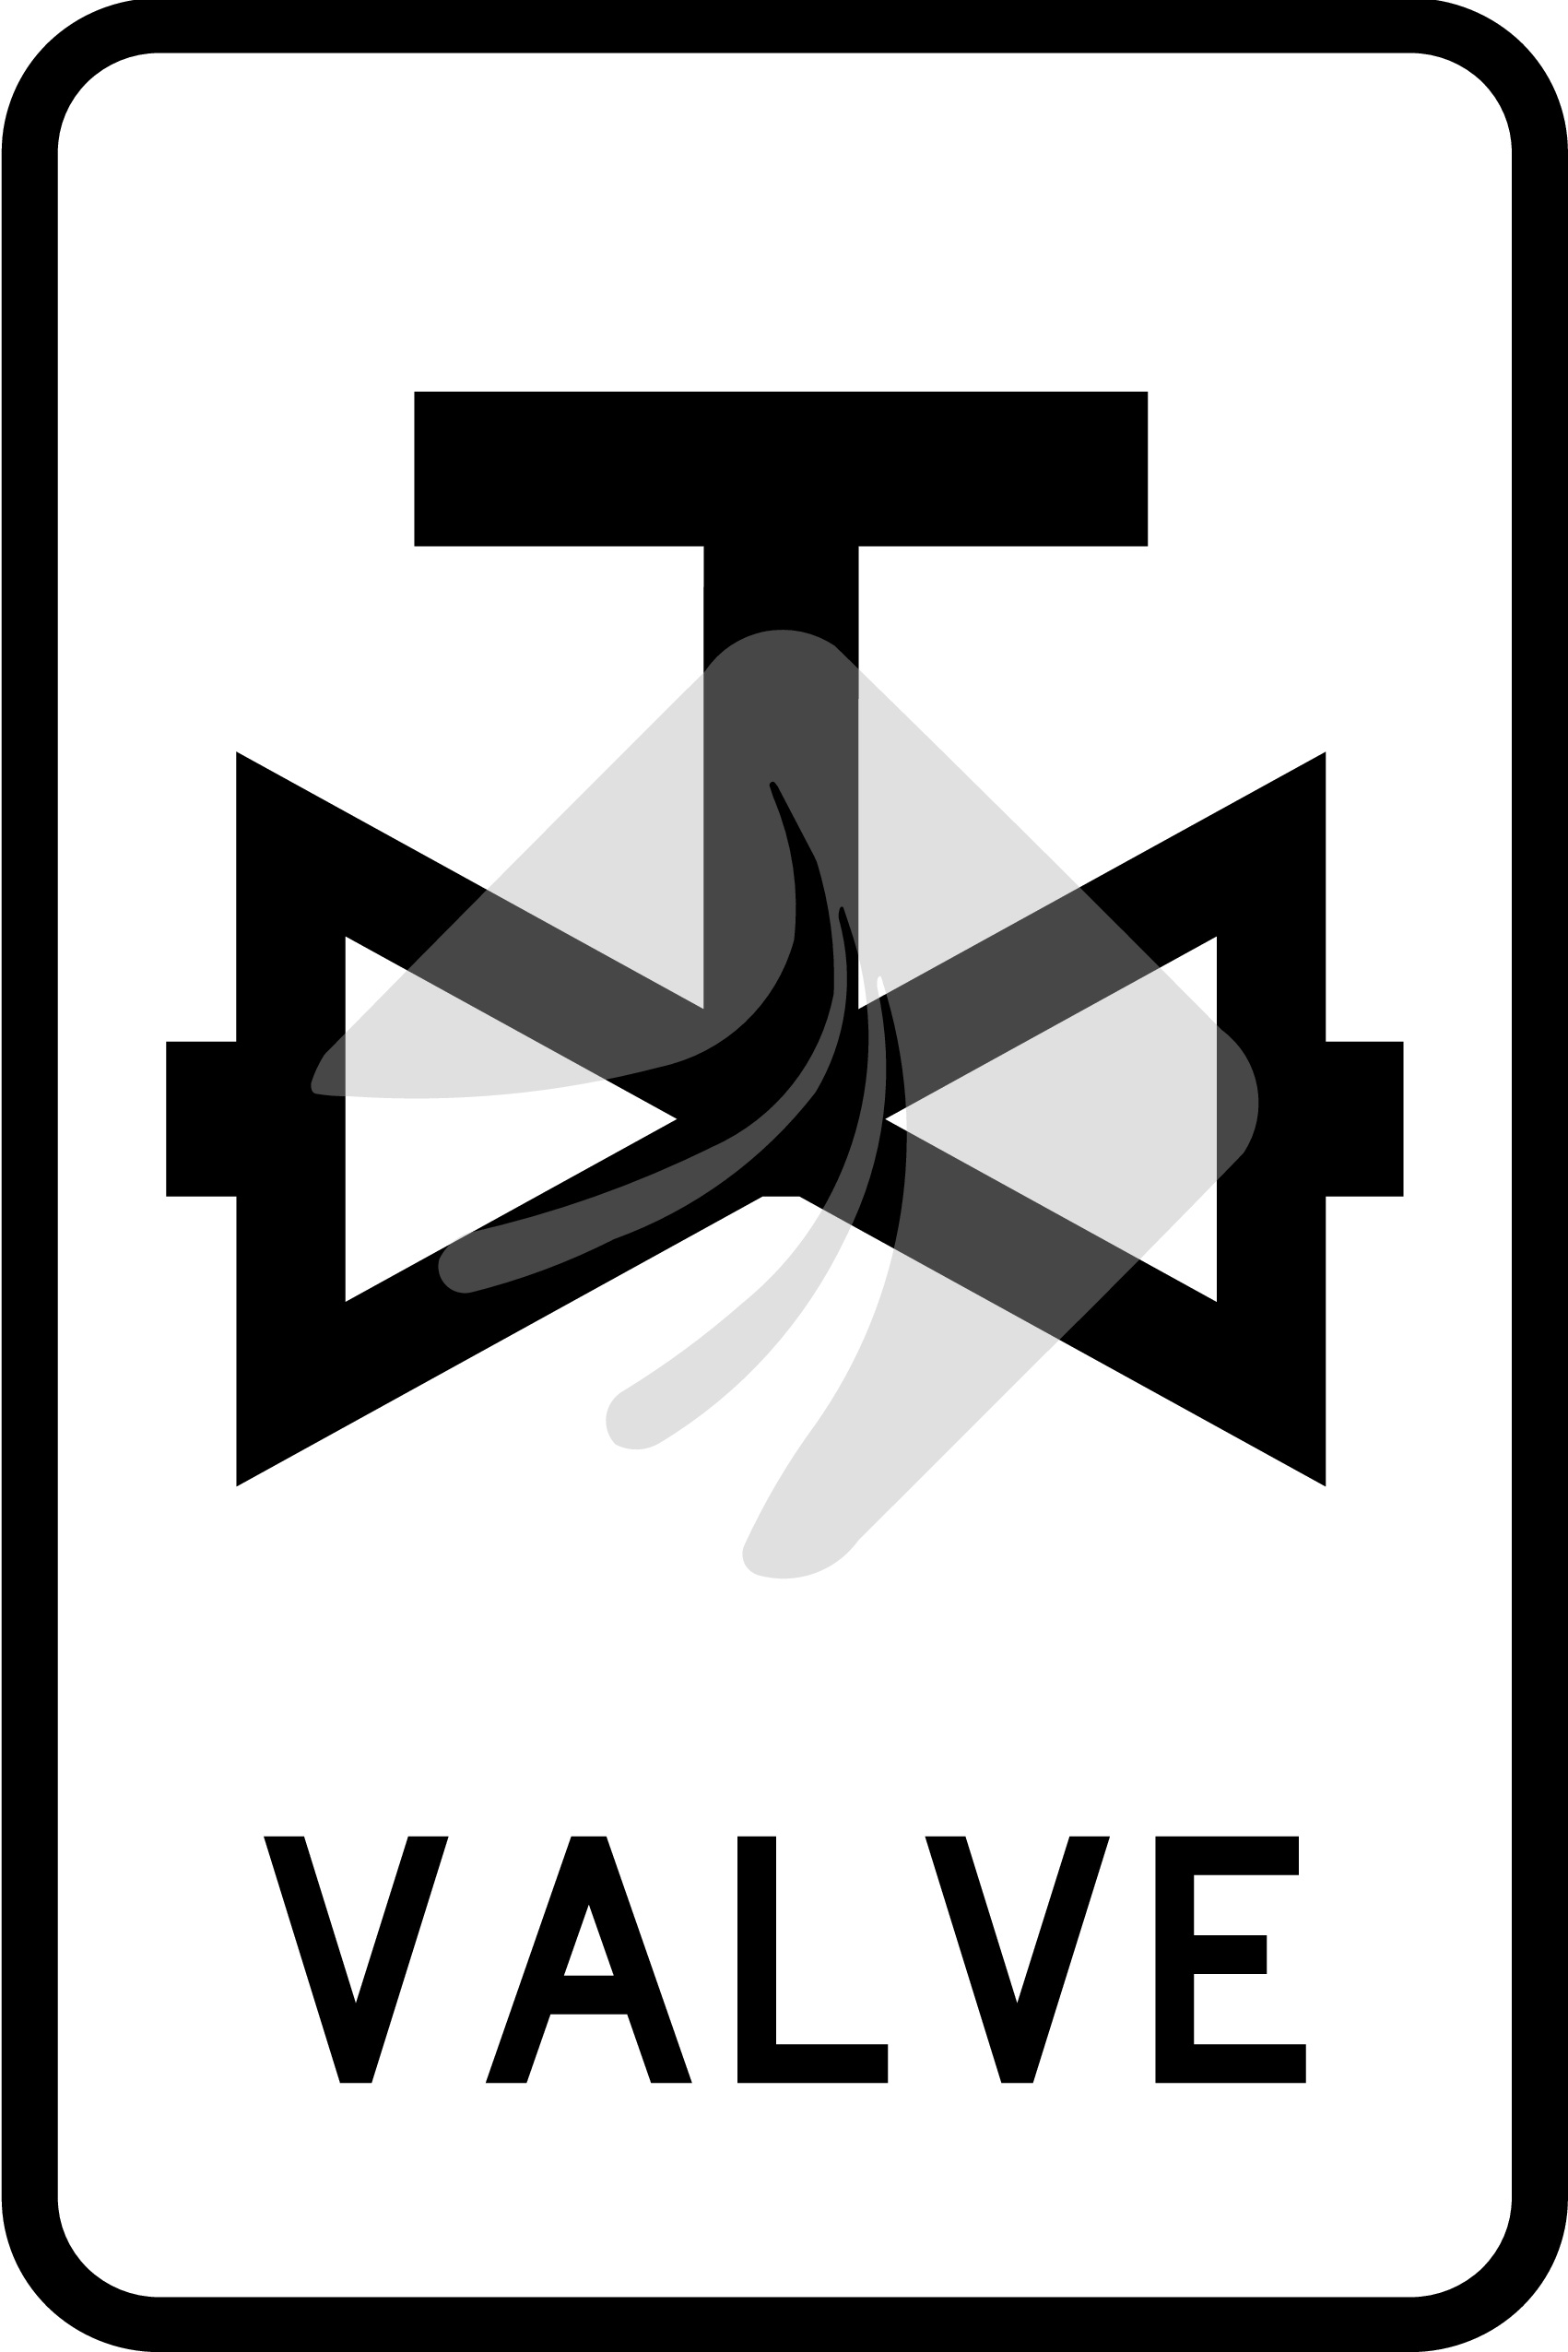 Valve Sign 